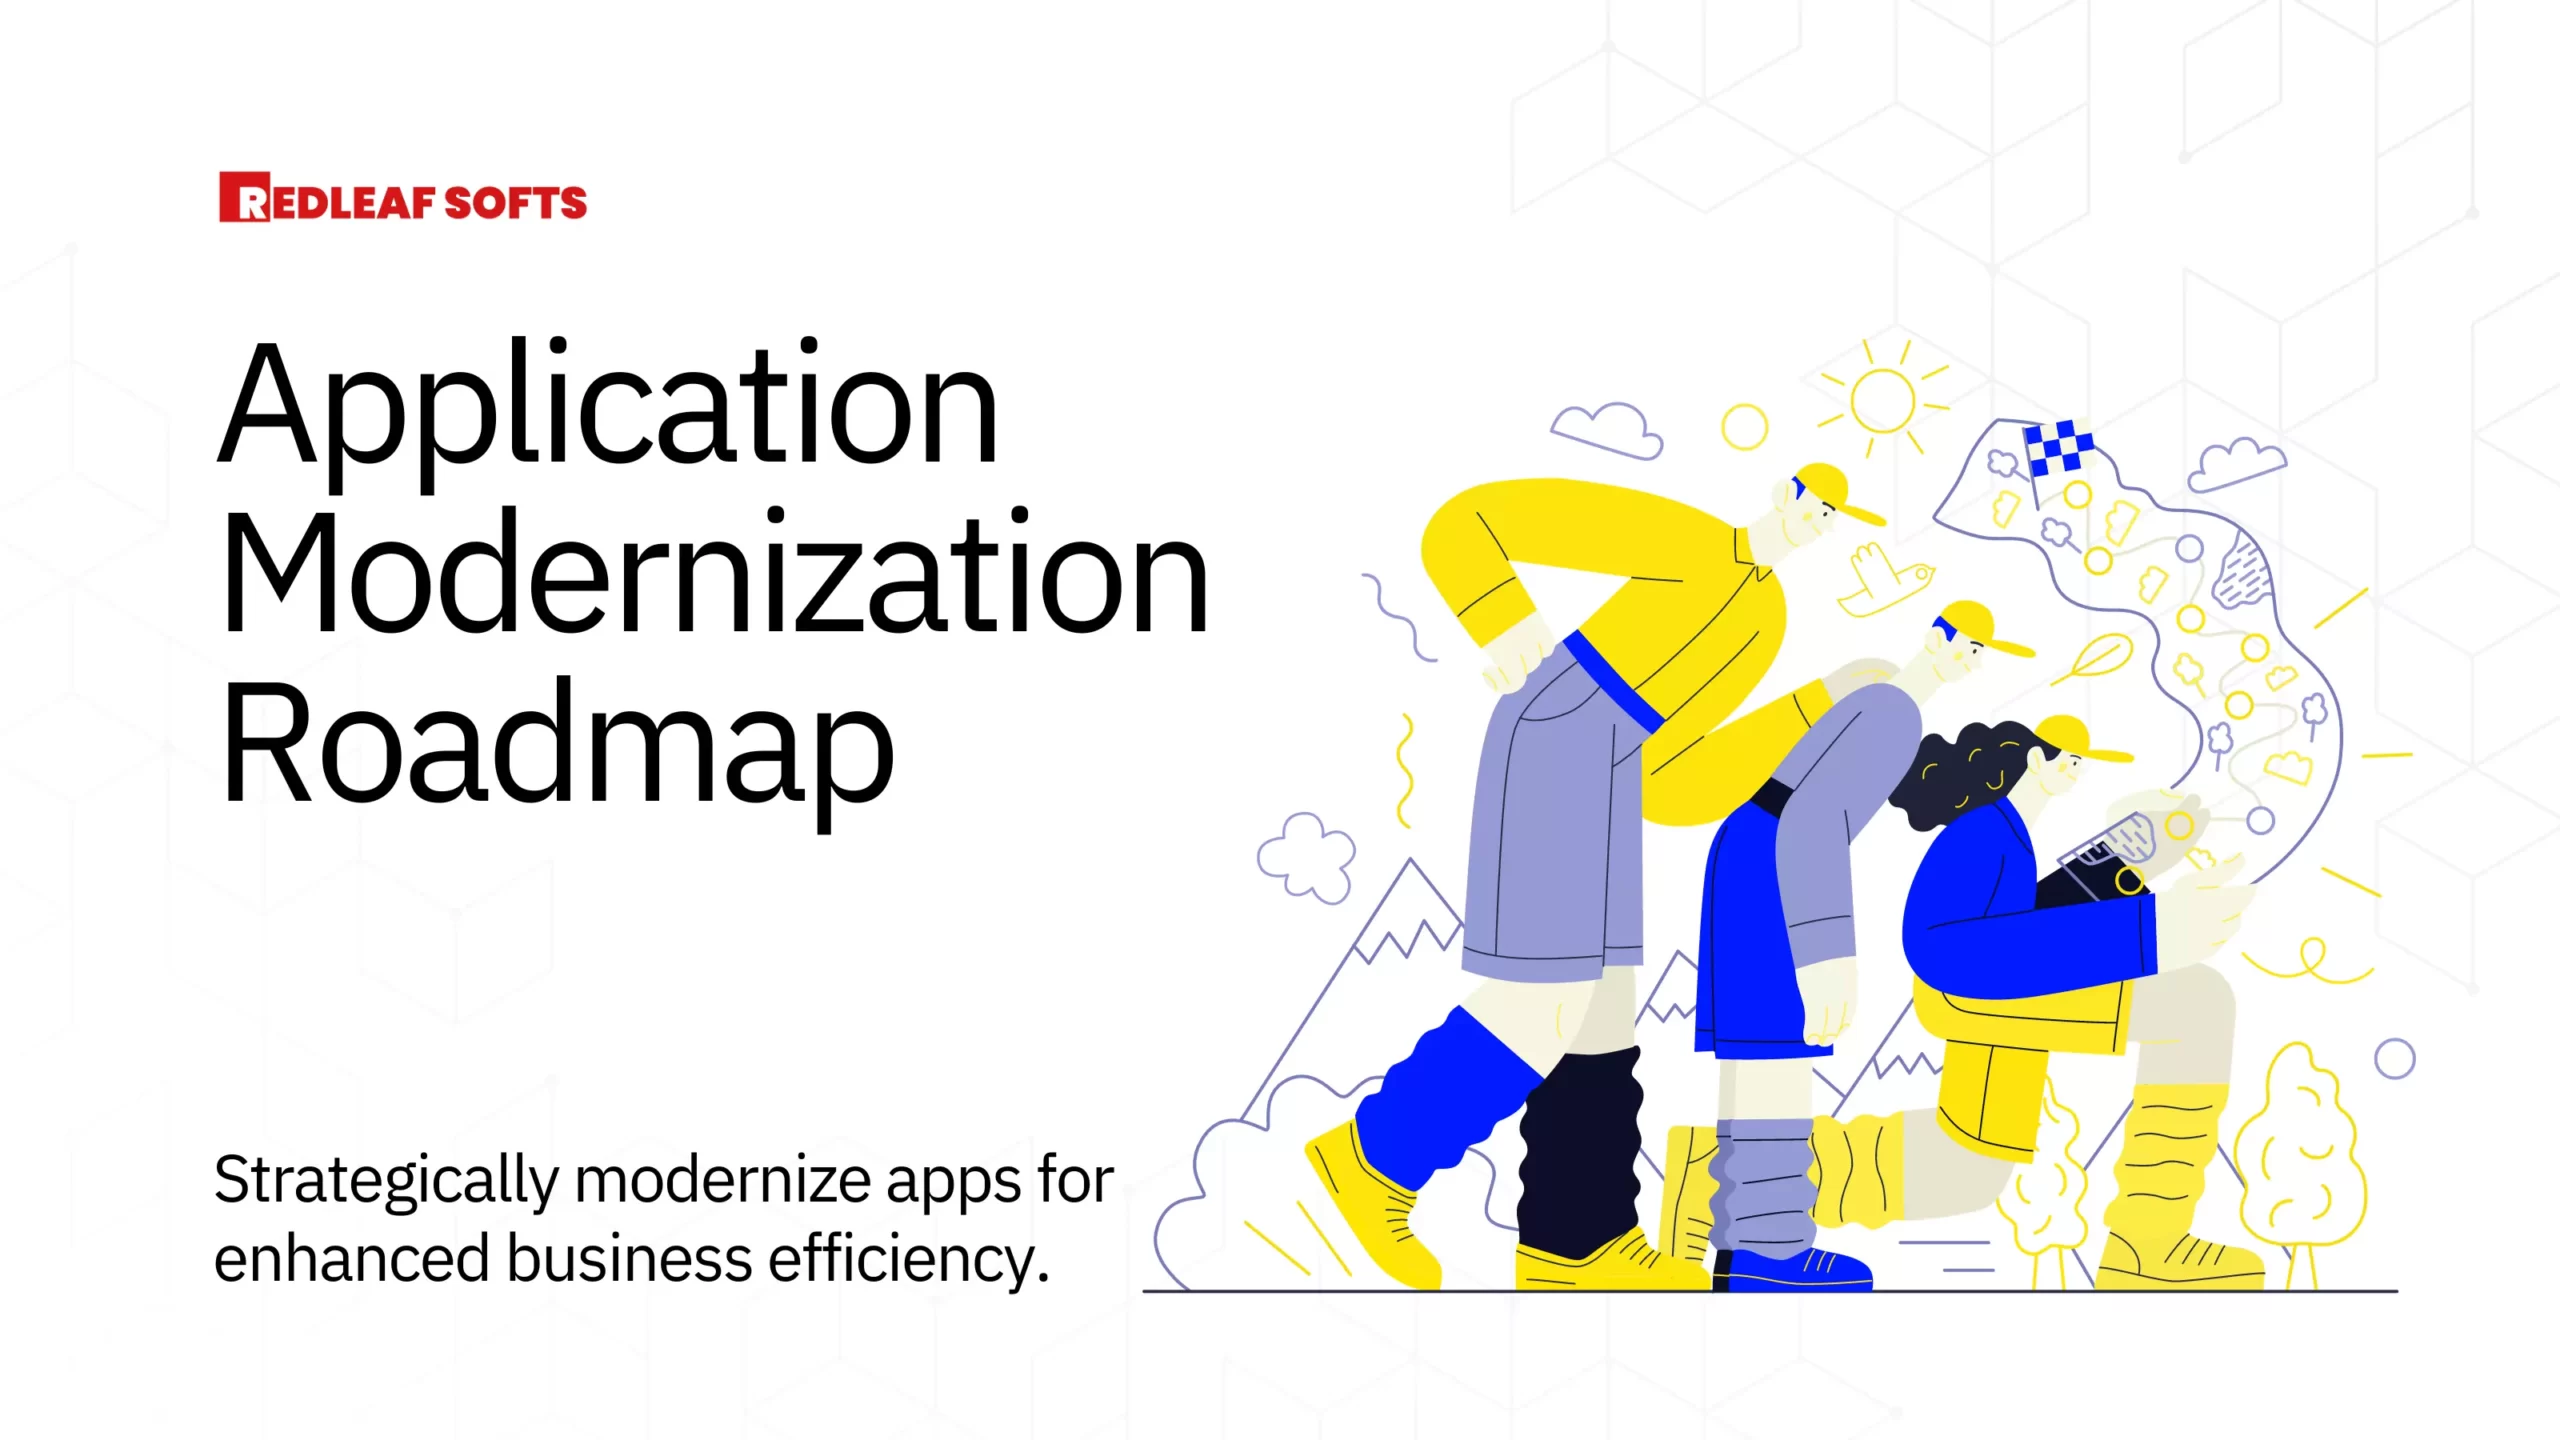 Application Modernization Roadmap for business